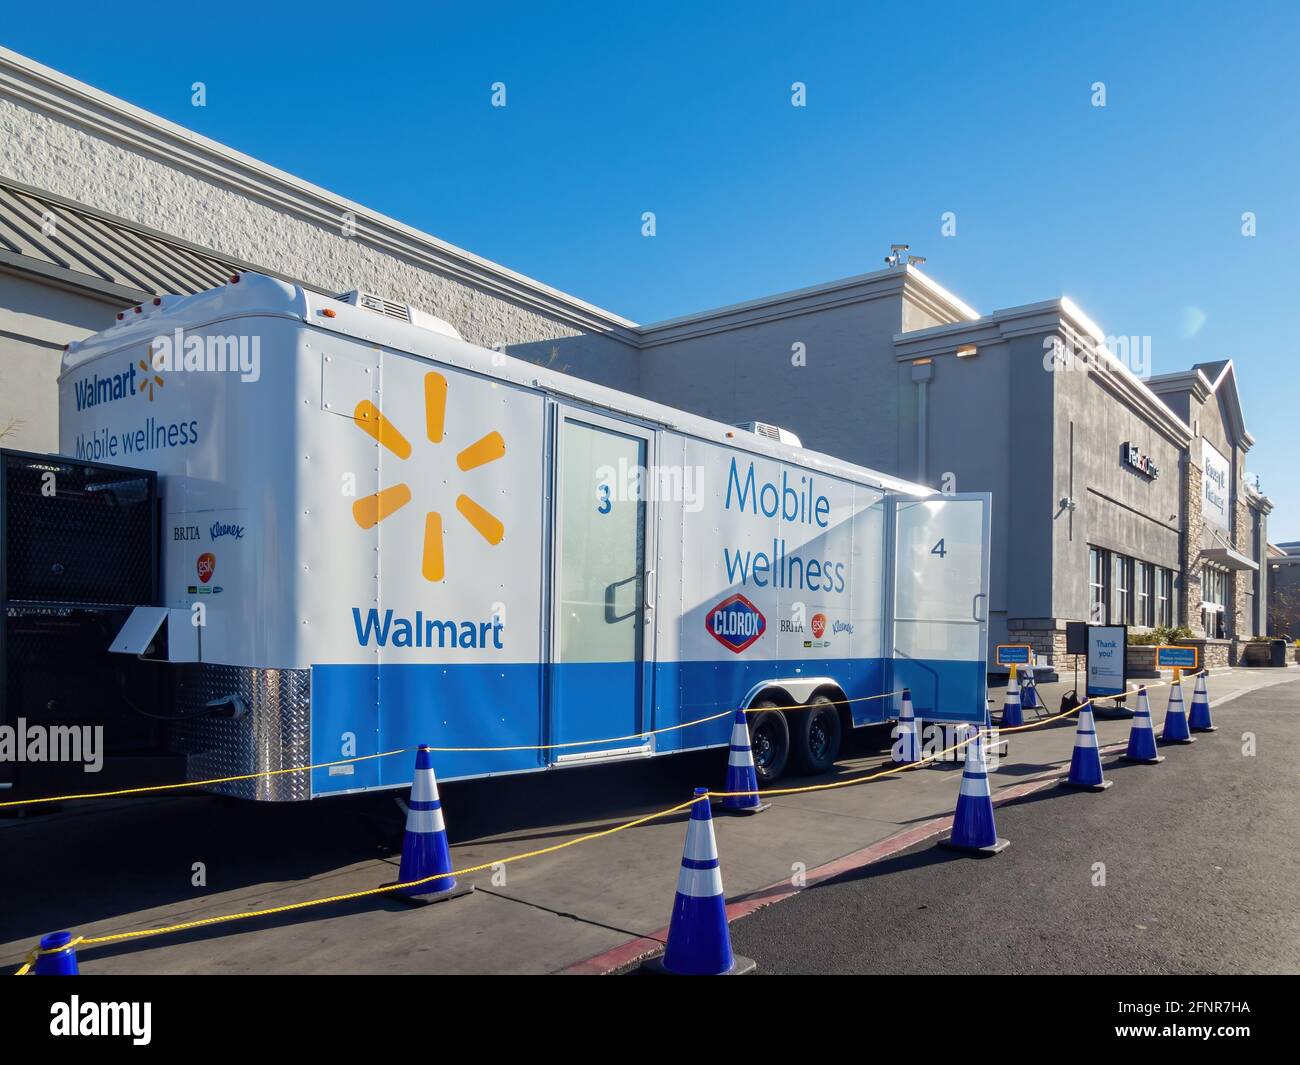 Las Vegas, FEB 25, 2021 - Walmart Mobile wellness truck in front